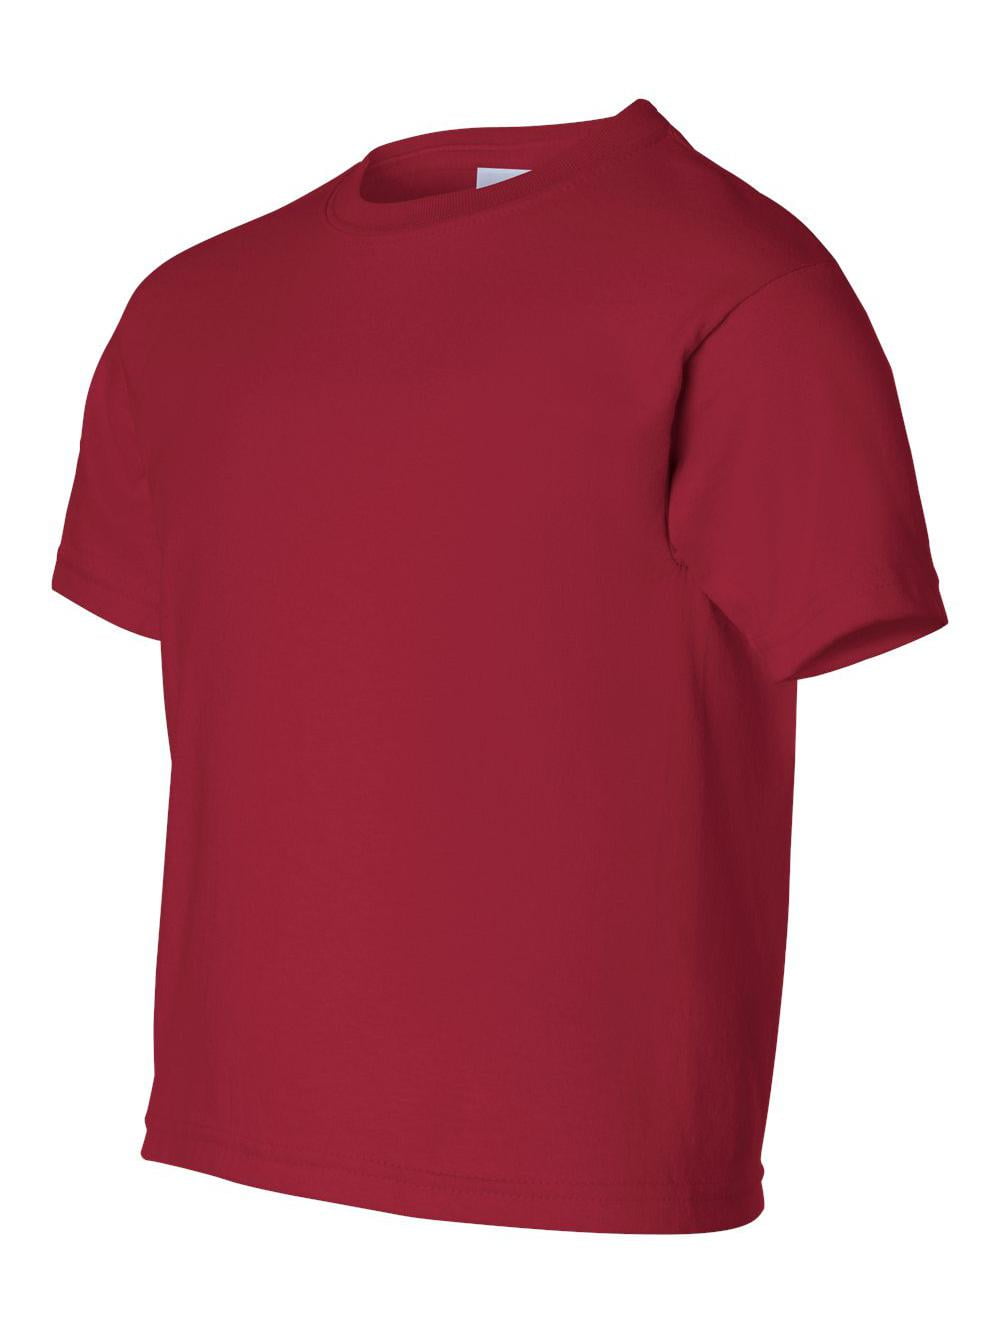 Gildan - Ultra Cotton Youth T-Shirt - 2000B - Cardinal Red - Size: S